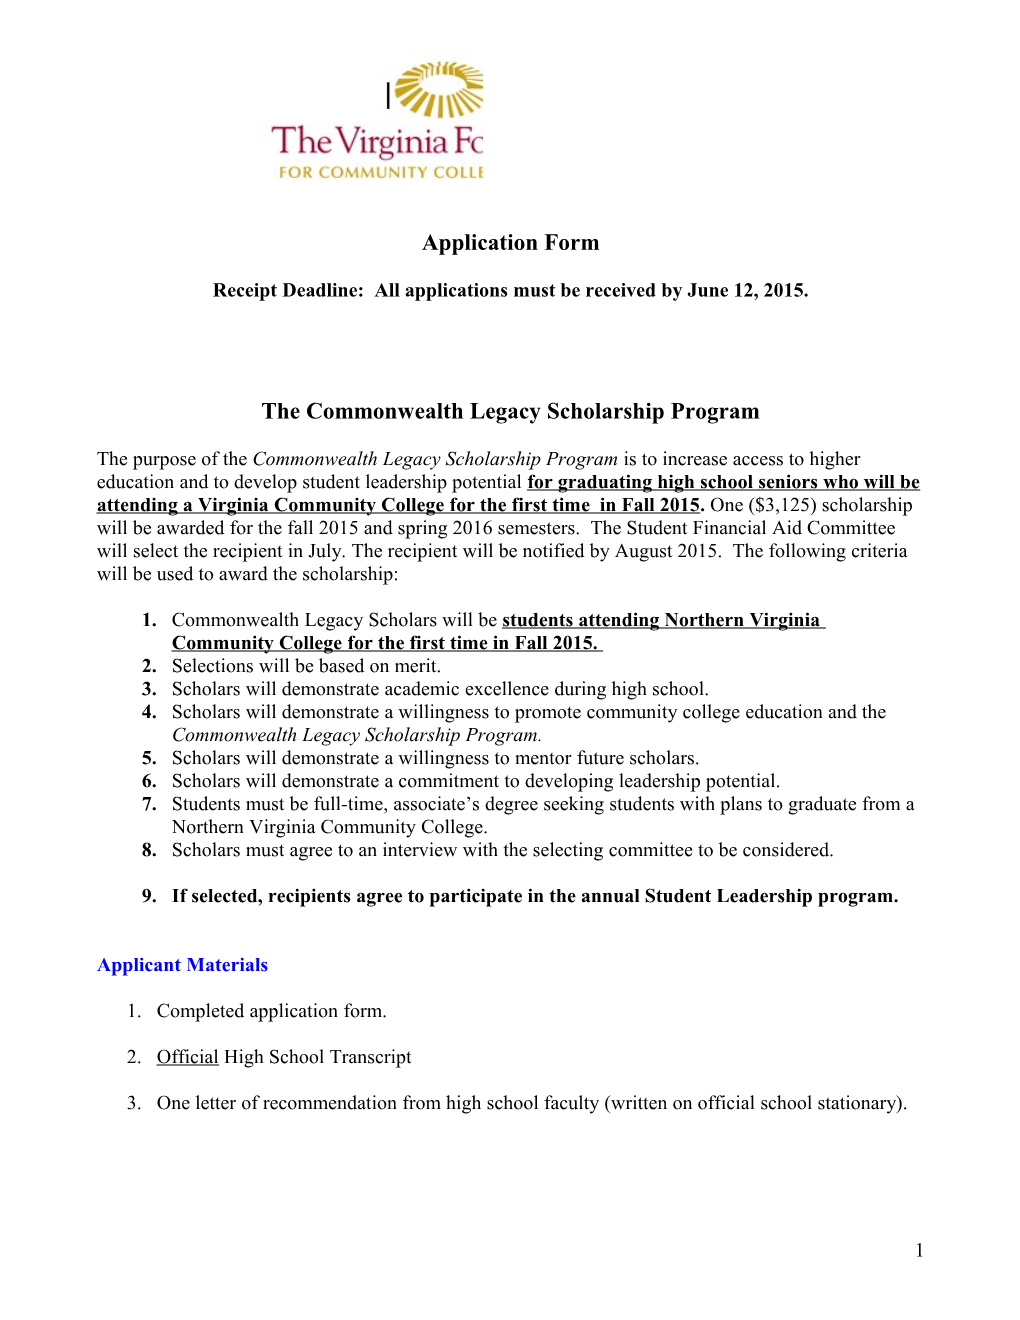 The Commonwealth Legacy Scholarship Program